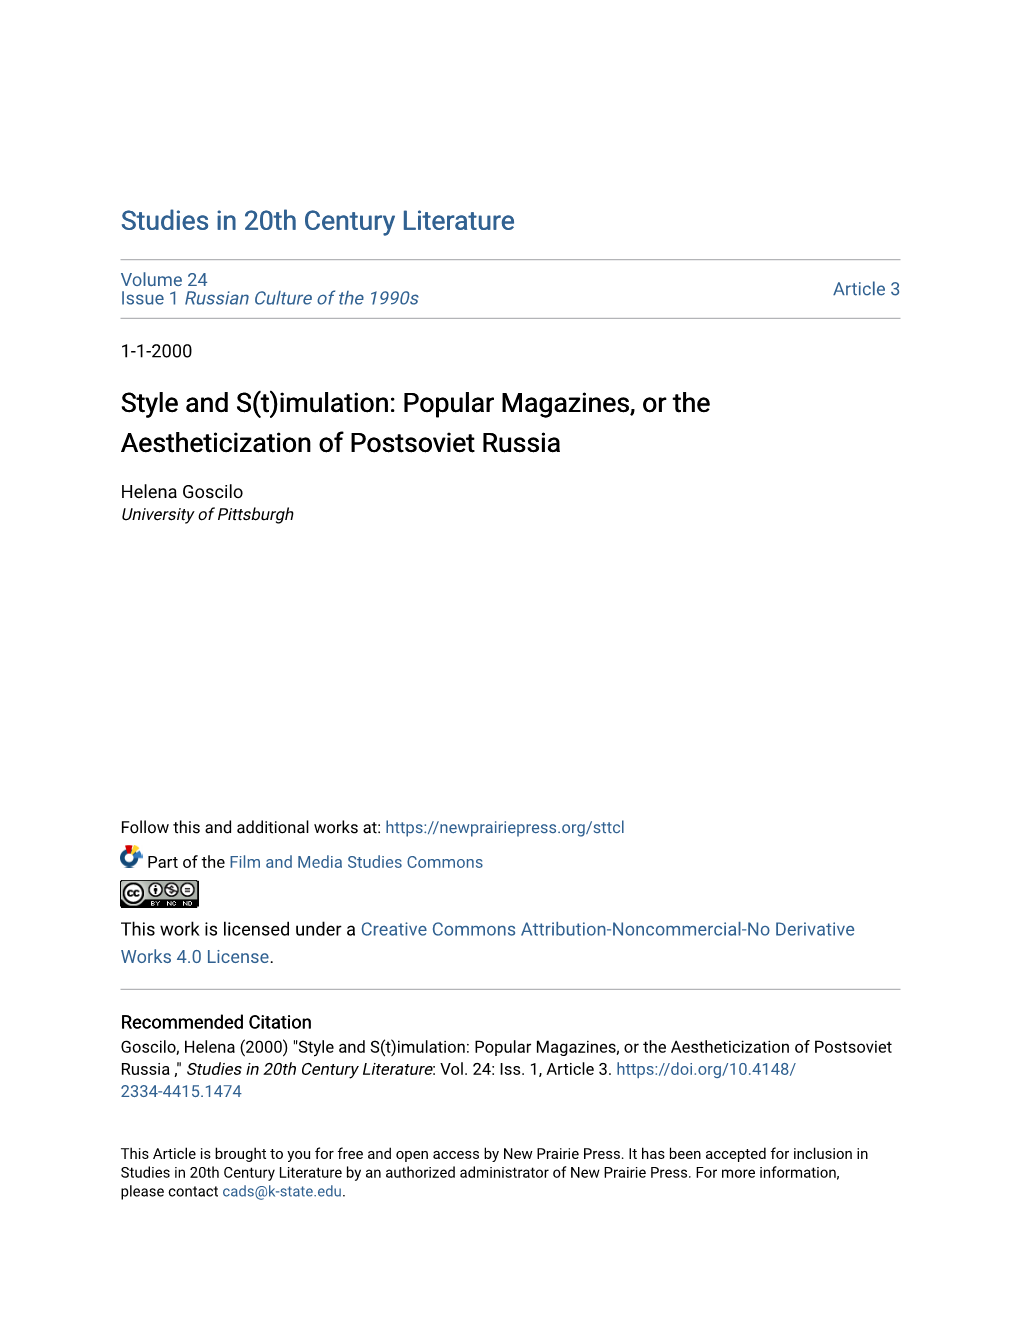 Popular Magazines, Or the Aestheticization of Postsoviet Russia